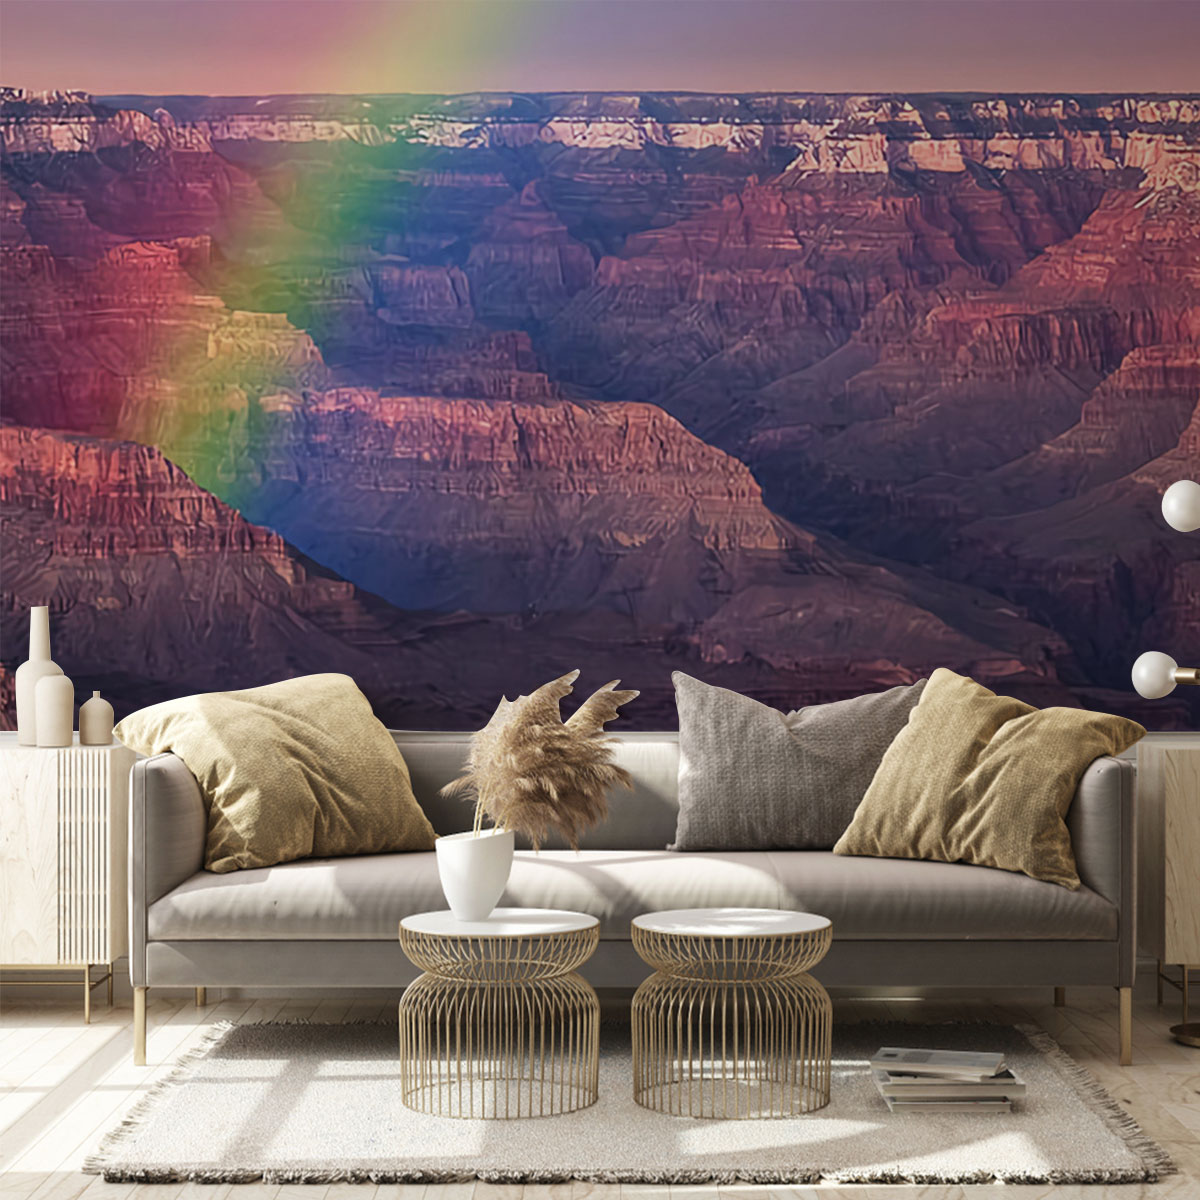 Rainbow Over Grand Canyon Wall Mural